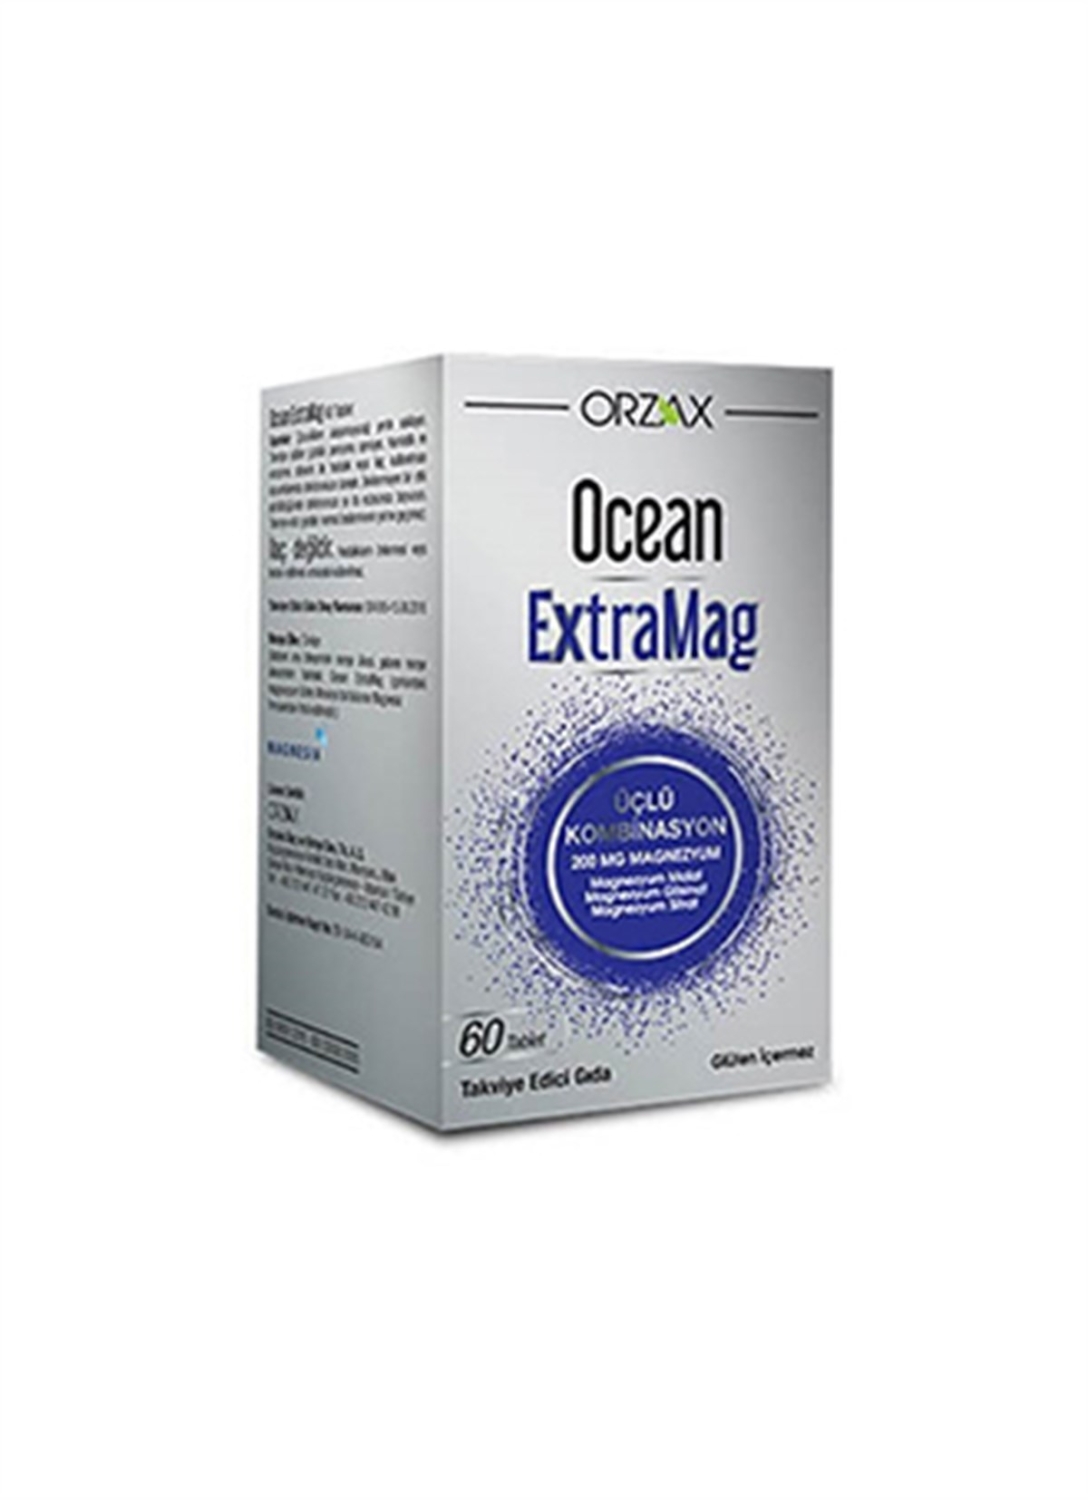 Ocean ExtraMag 60 Tablet - 1